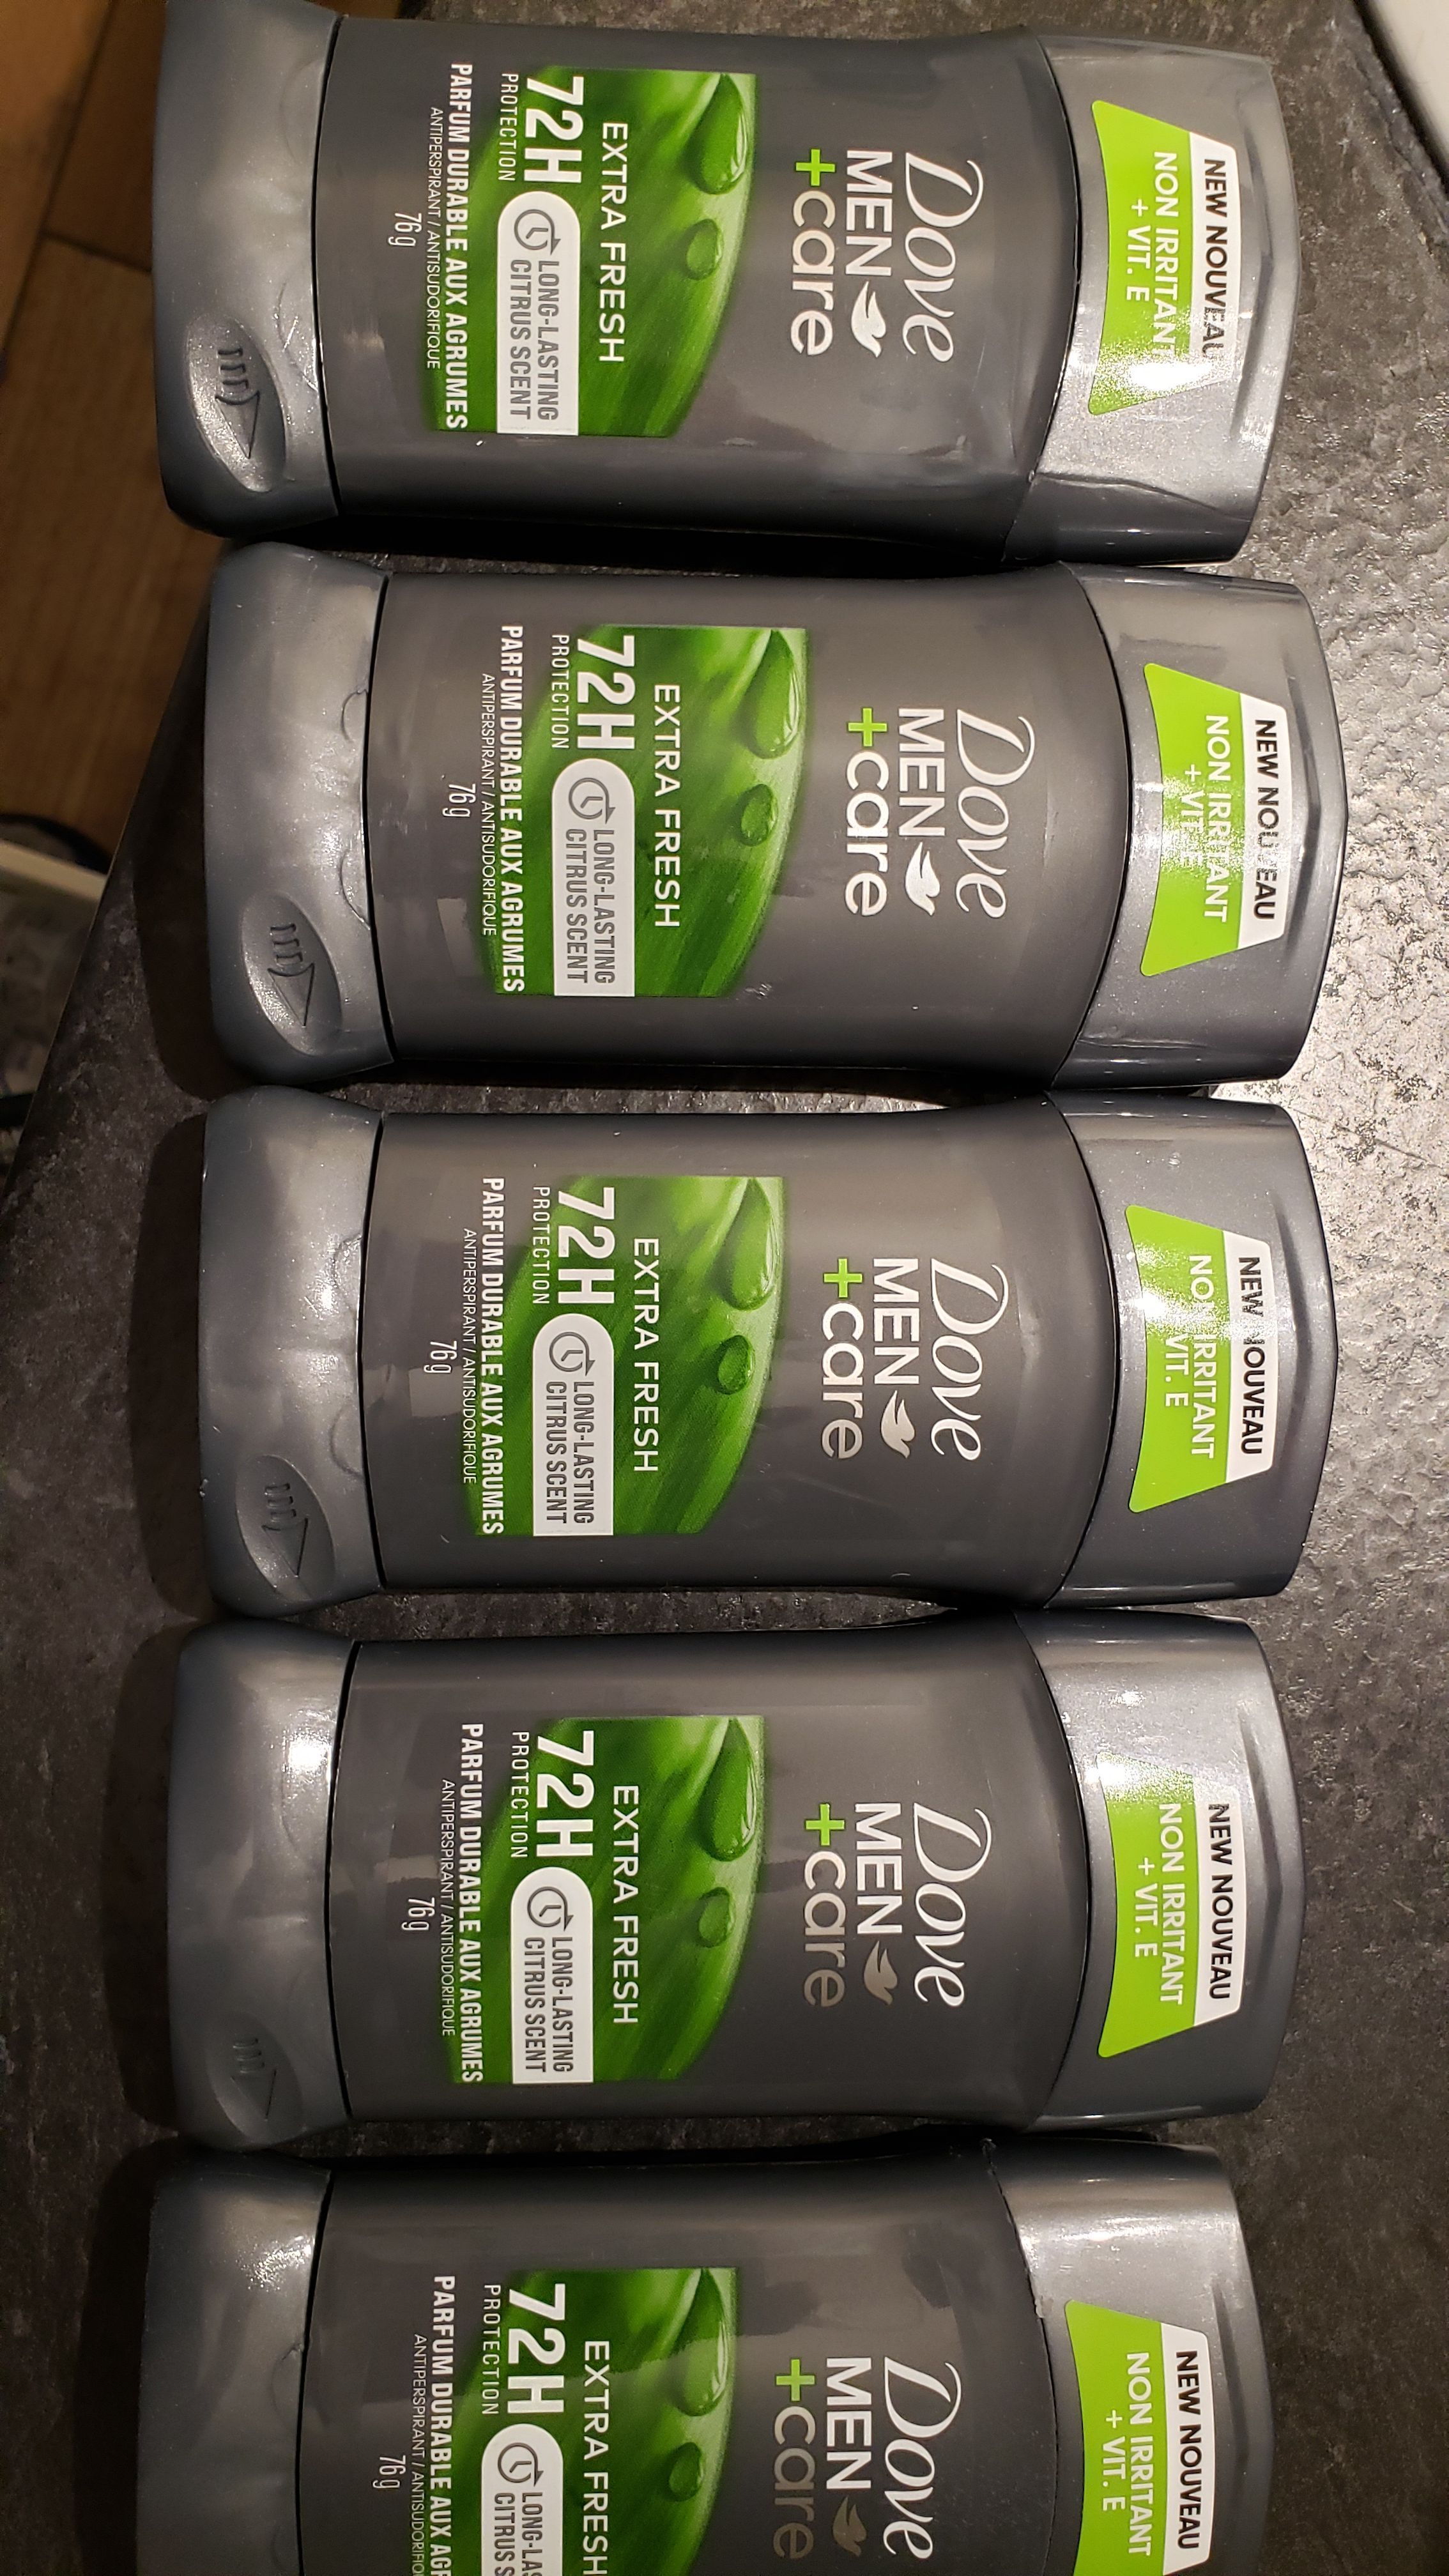 Men+Care Extra Fresh Dry Spray Antiperspirant Deodorant